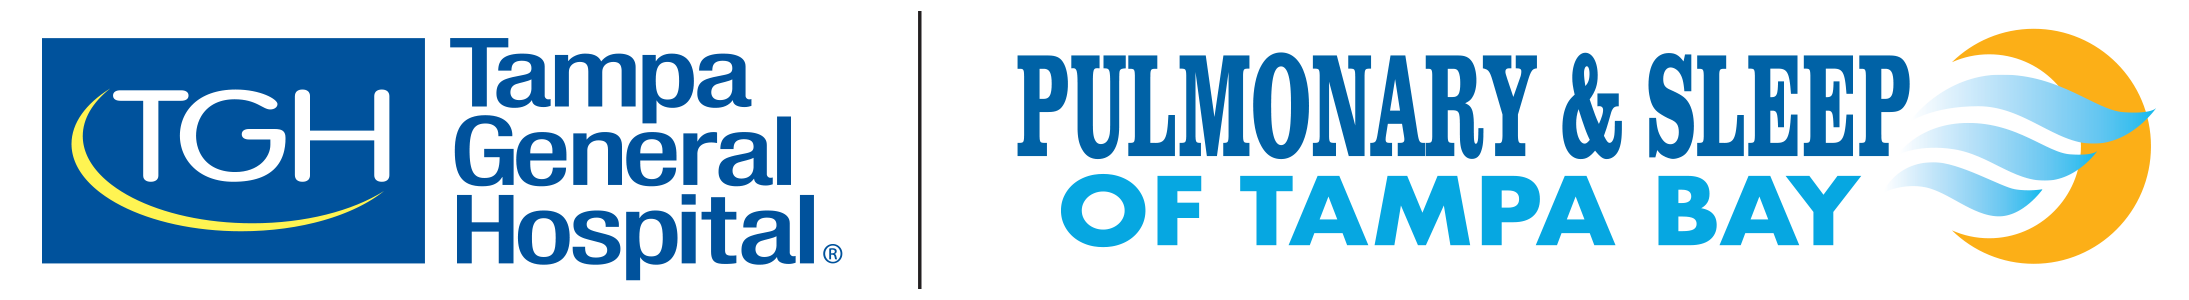 TGH & Pulmonary & Sleep of Tampa Bay logo